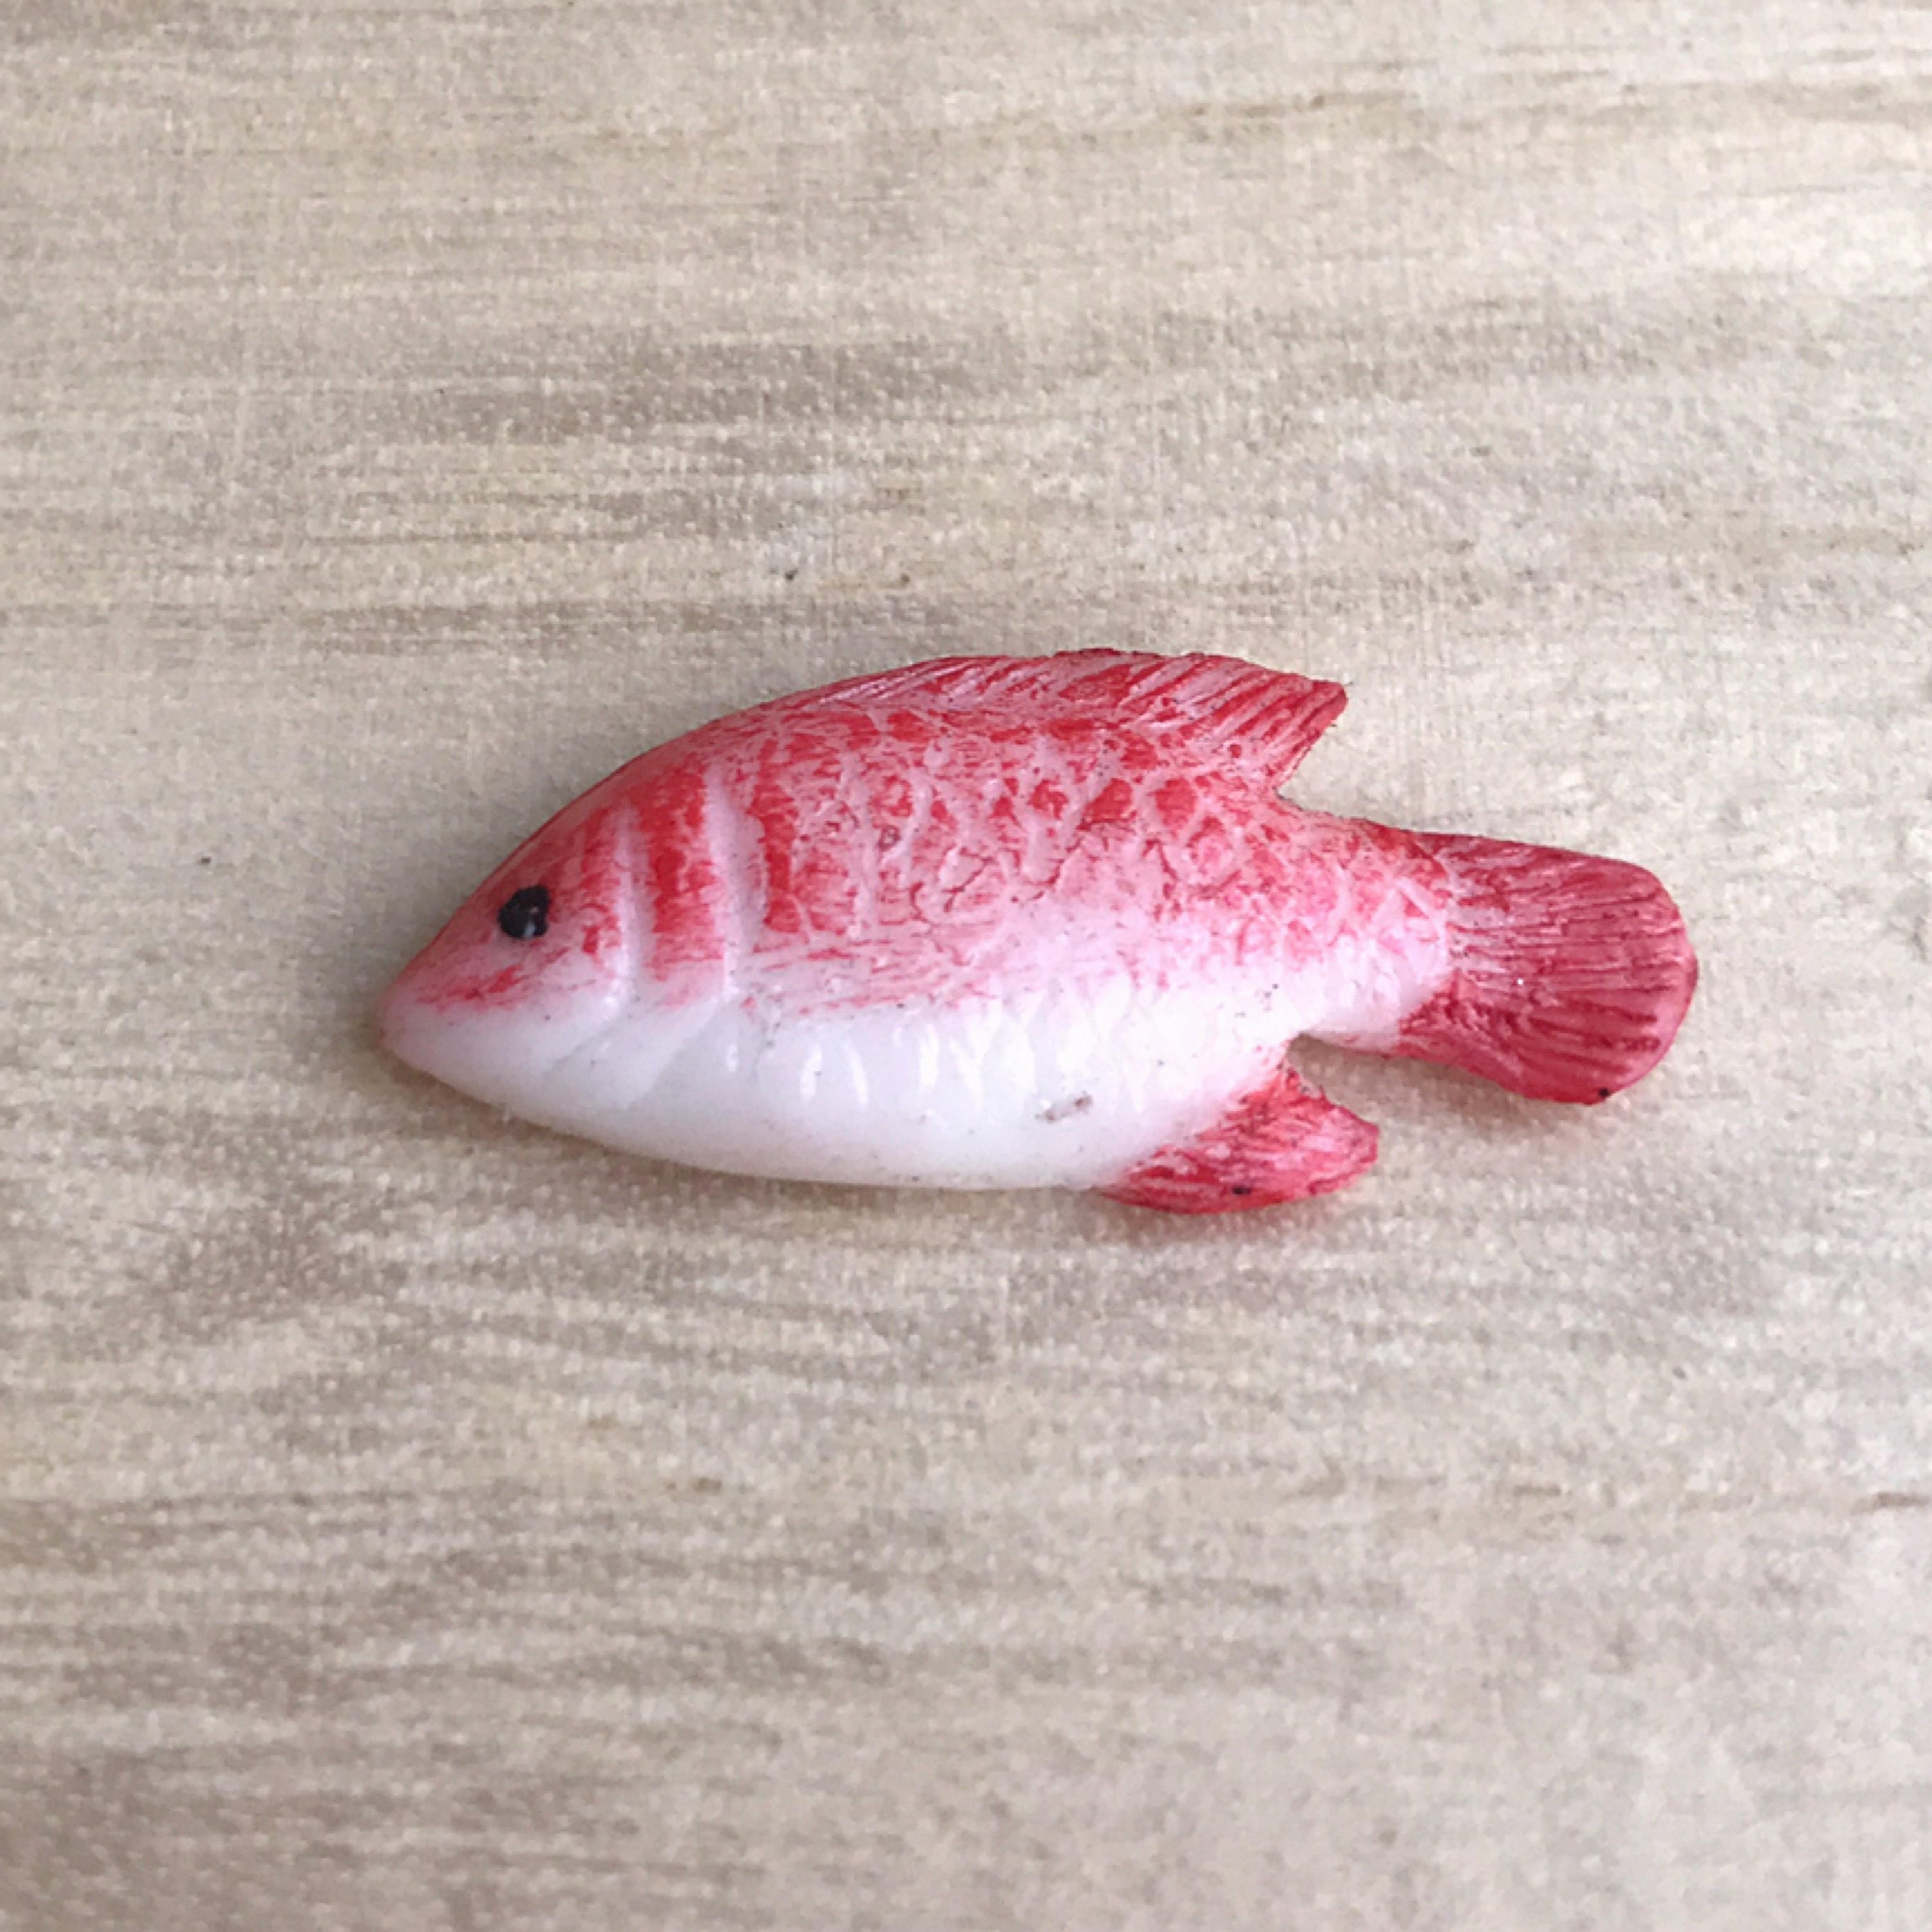 Puppenhaus Miniatur 2 Teil Pink Silikon Fisch Form 